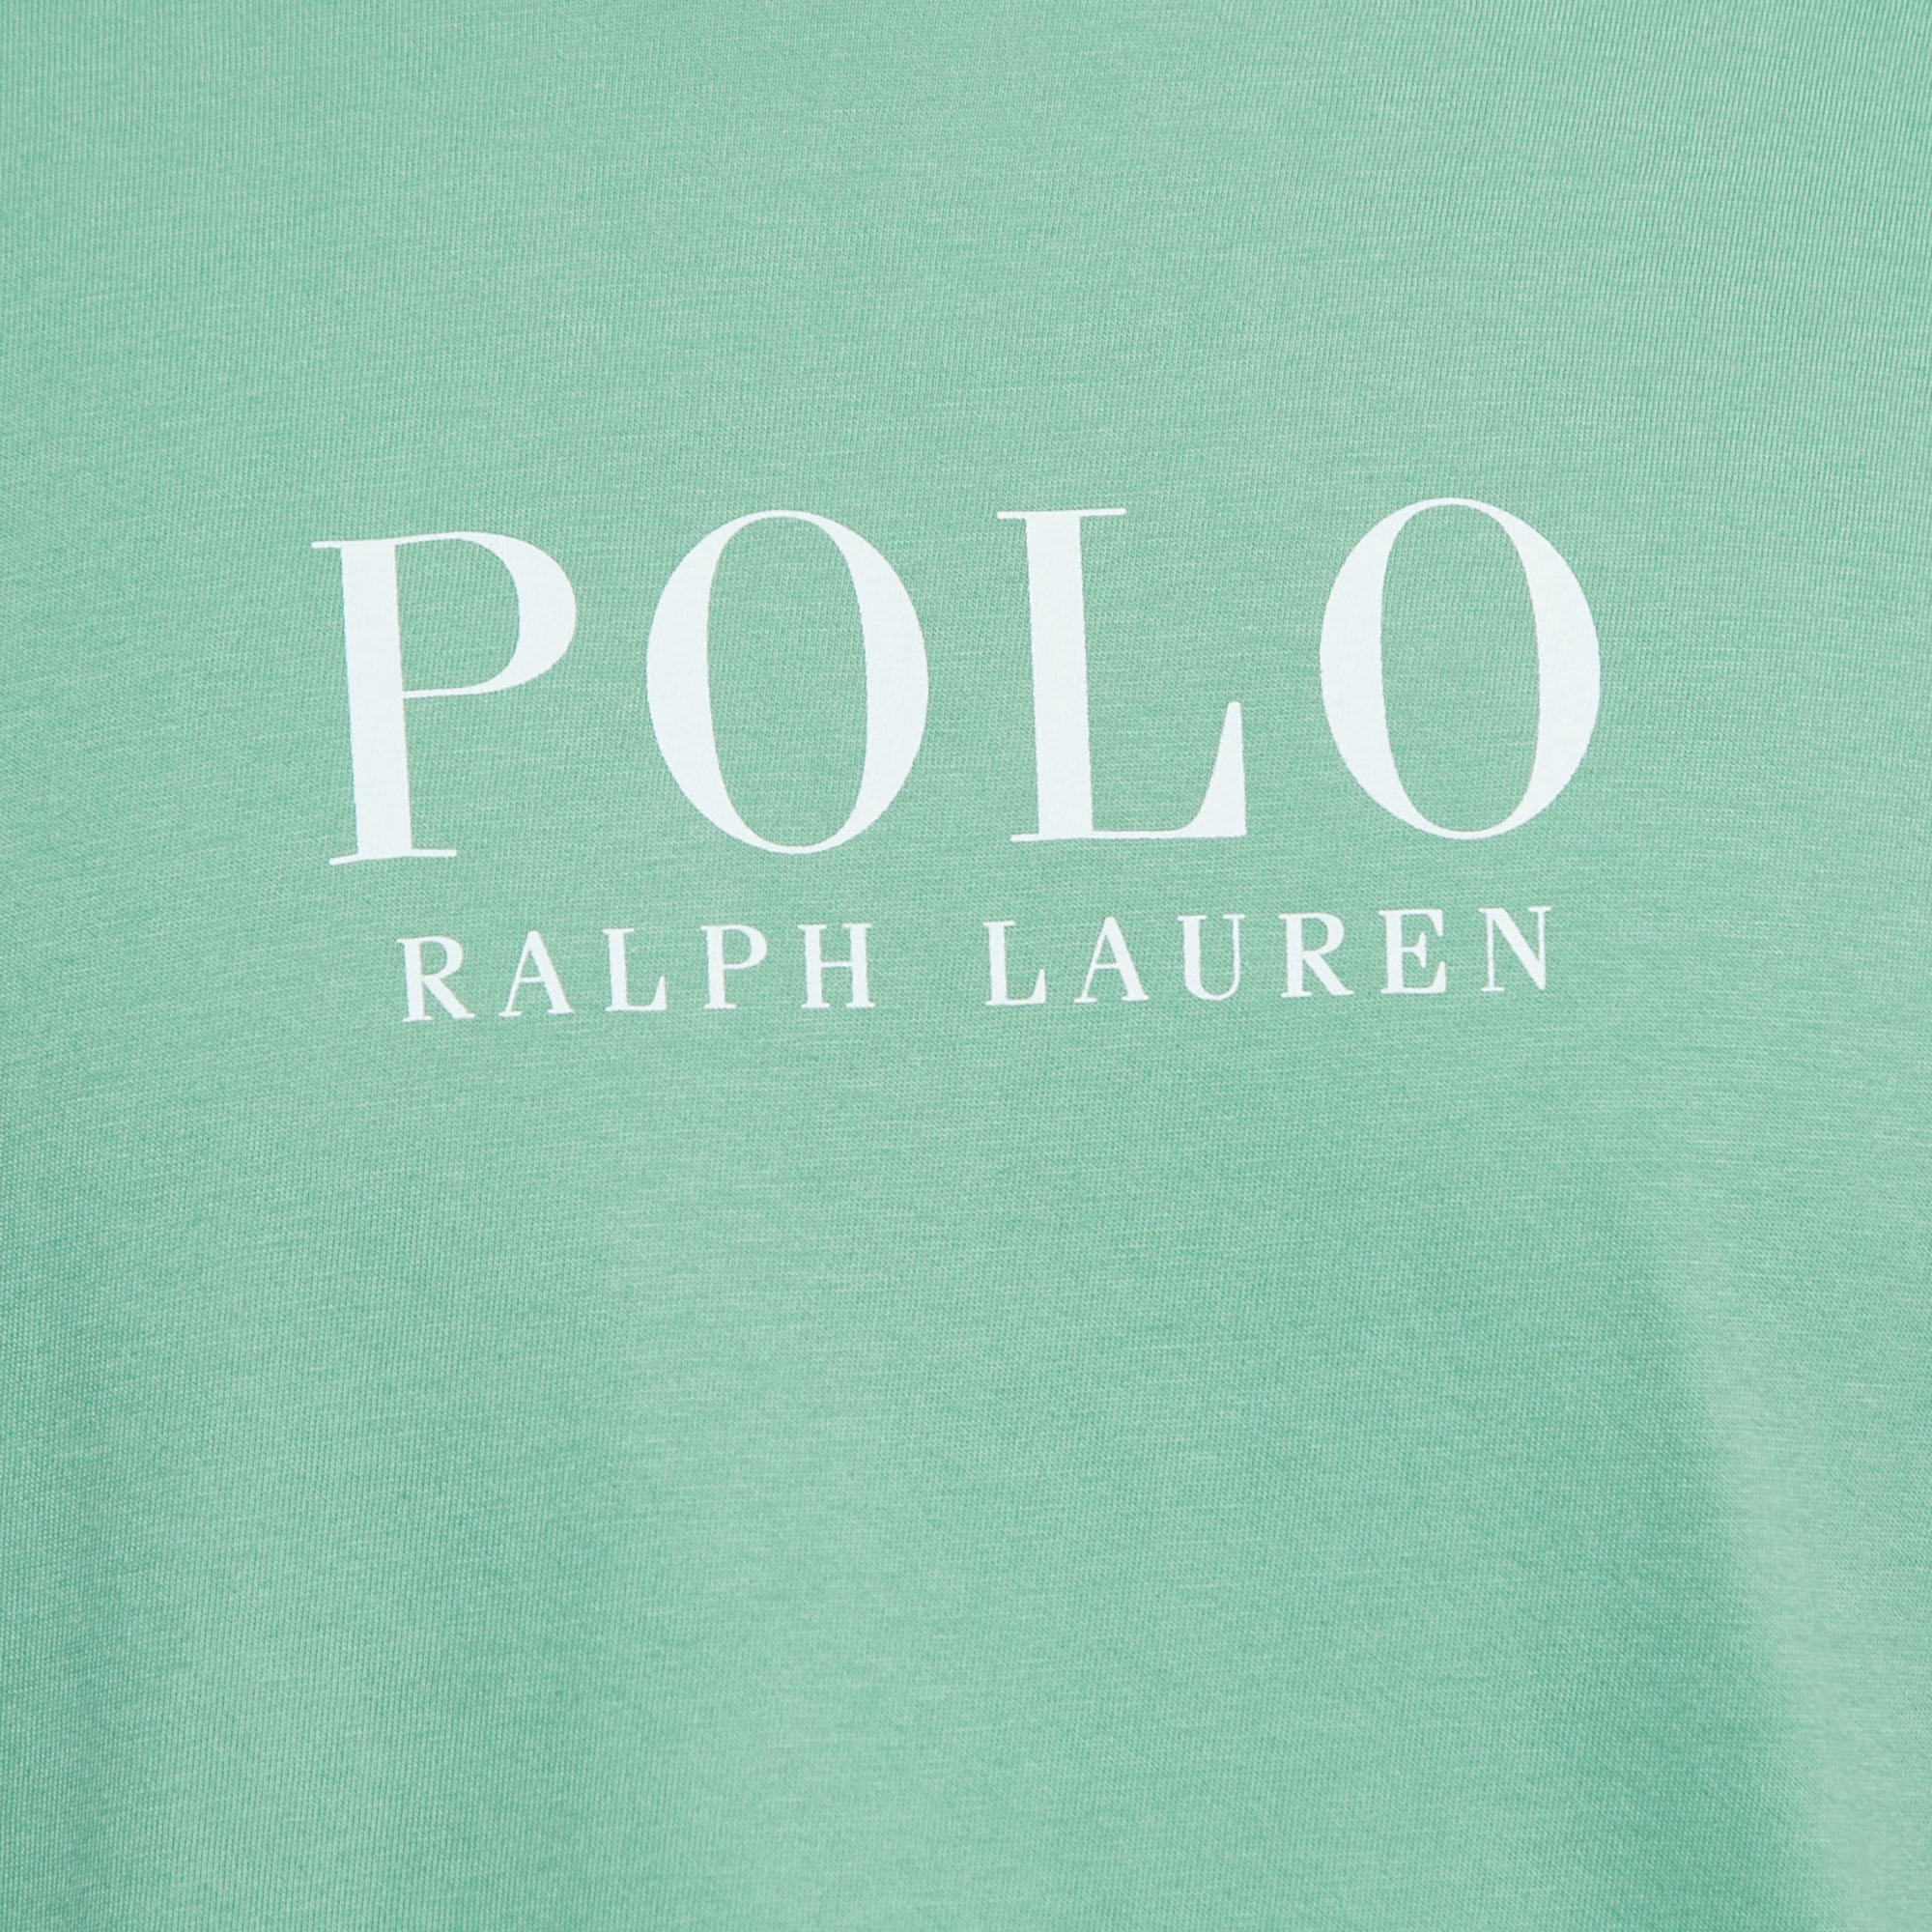 Polo Ralph Lauren Green Cotton Printed Long Sleeve T-Shirt M